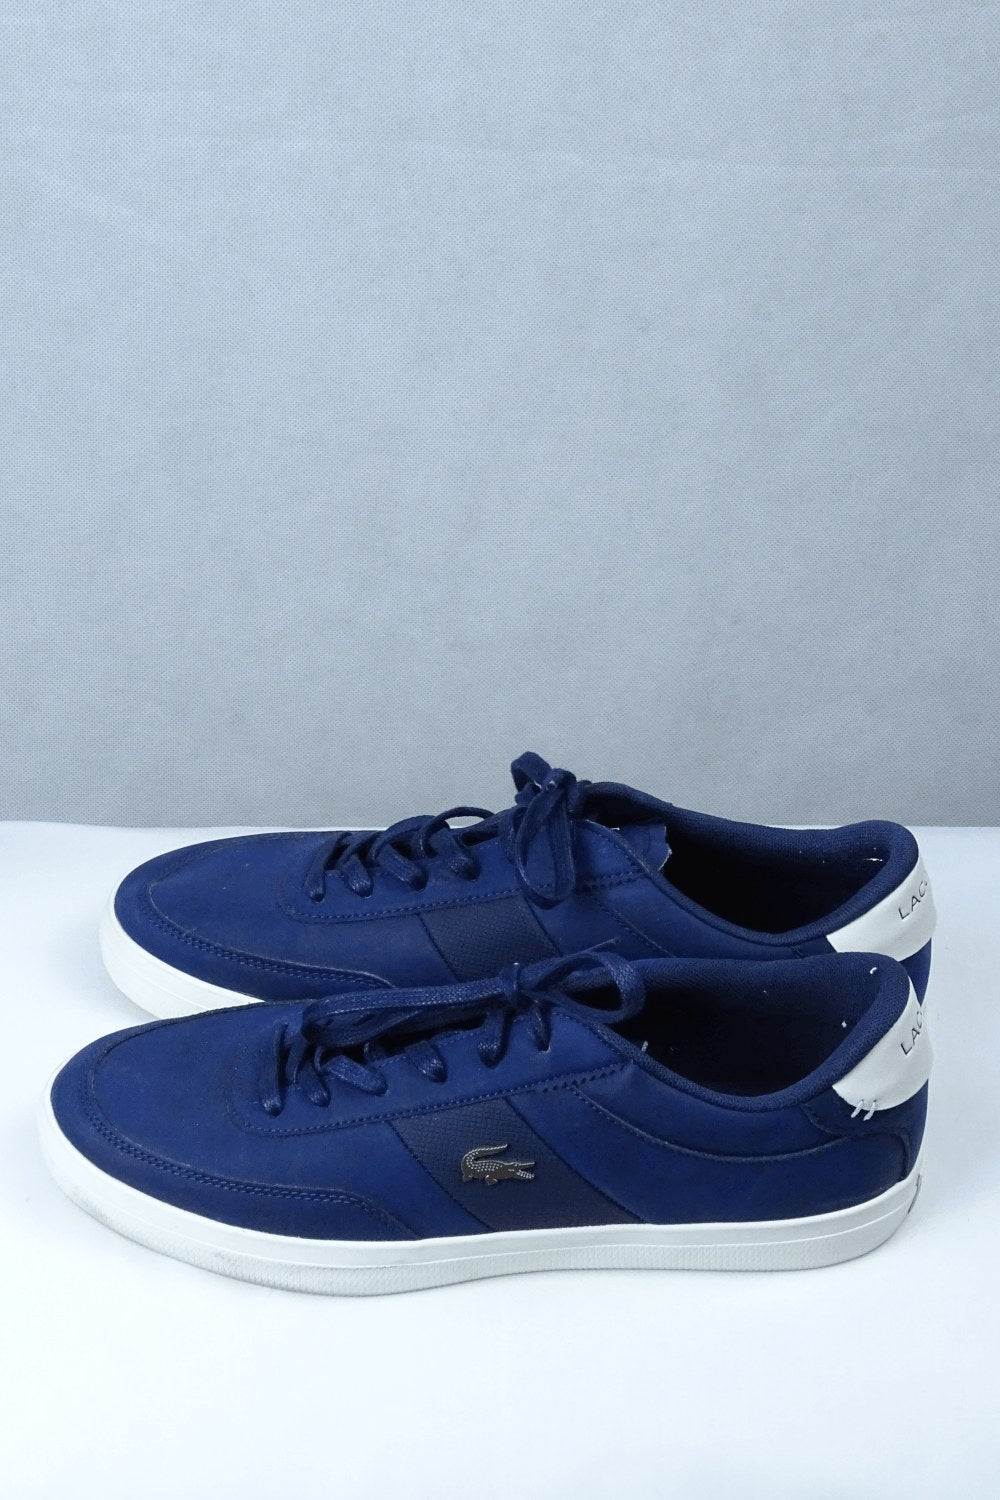 Lacost Blue Sneakers 7UK (AU 9)